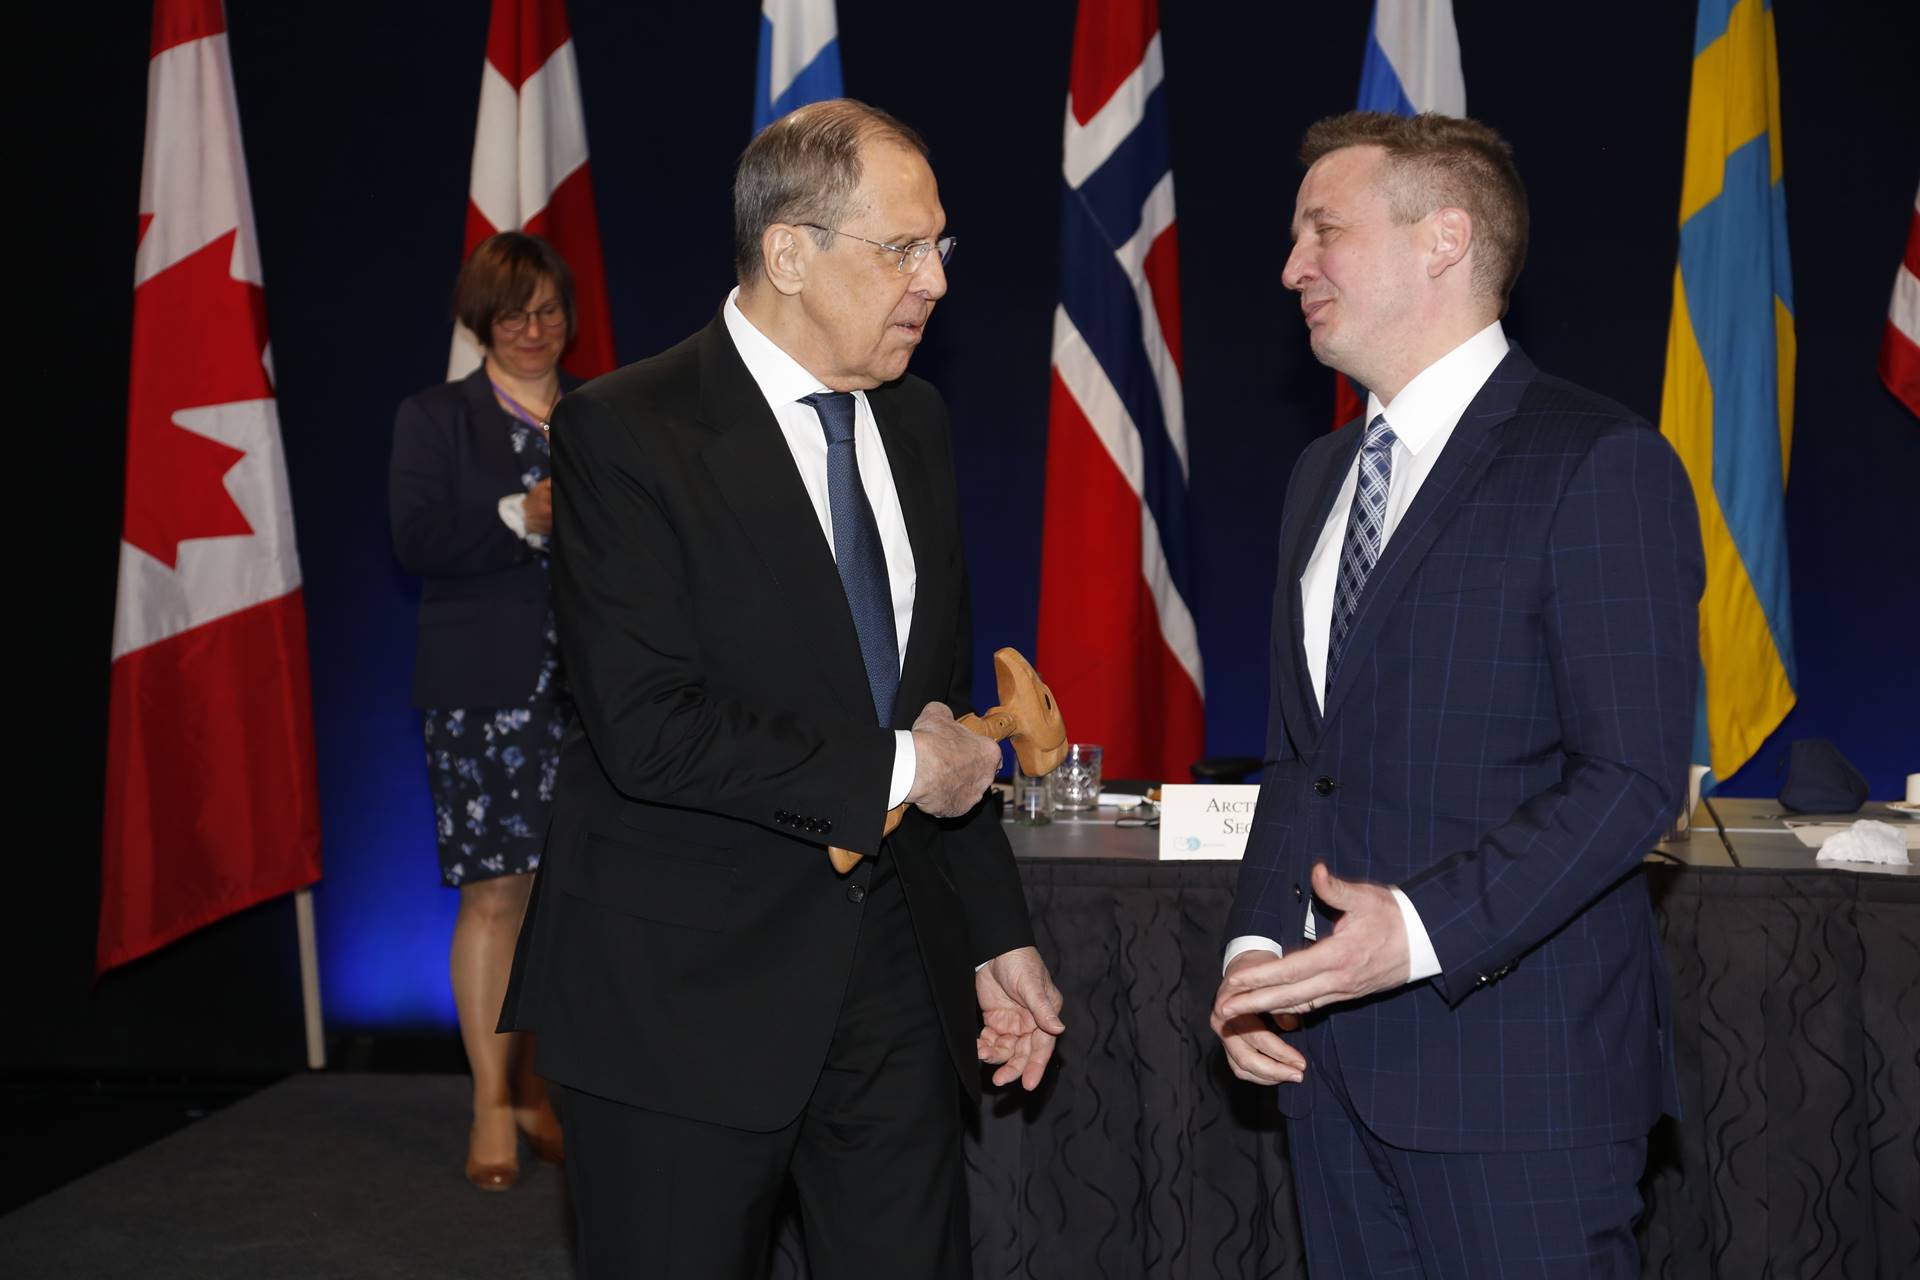 Sergey Lavrov, Russian Federation's Foreign Minister, receives the Chairmanship's gavel from Gudlaugur Thór Thórdarson, Iceland's Foreign Minister.  - mynd